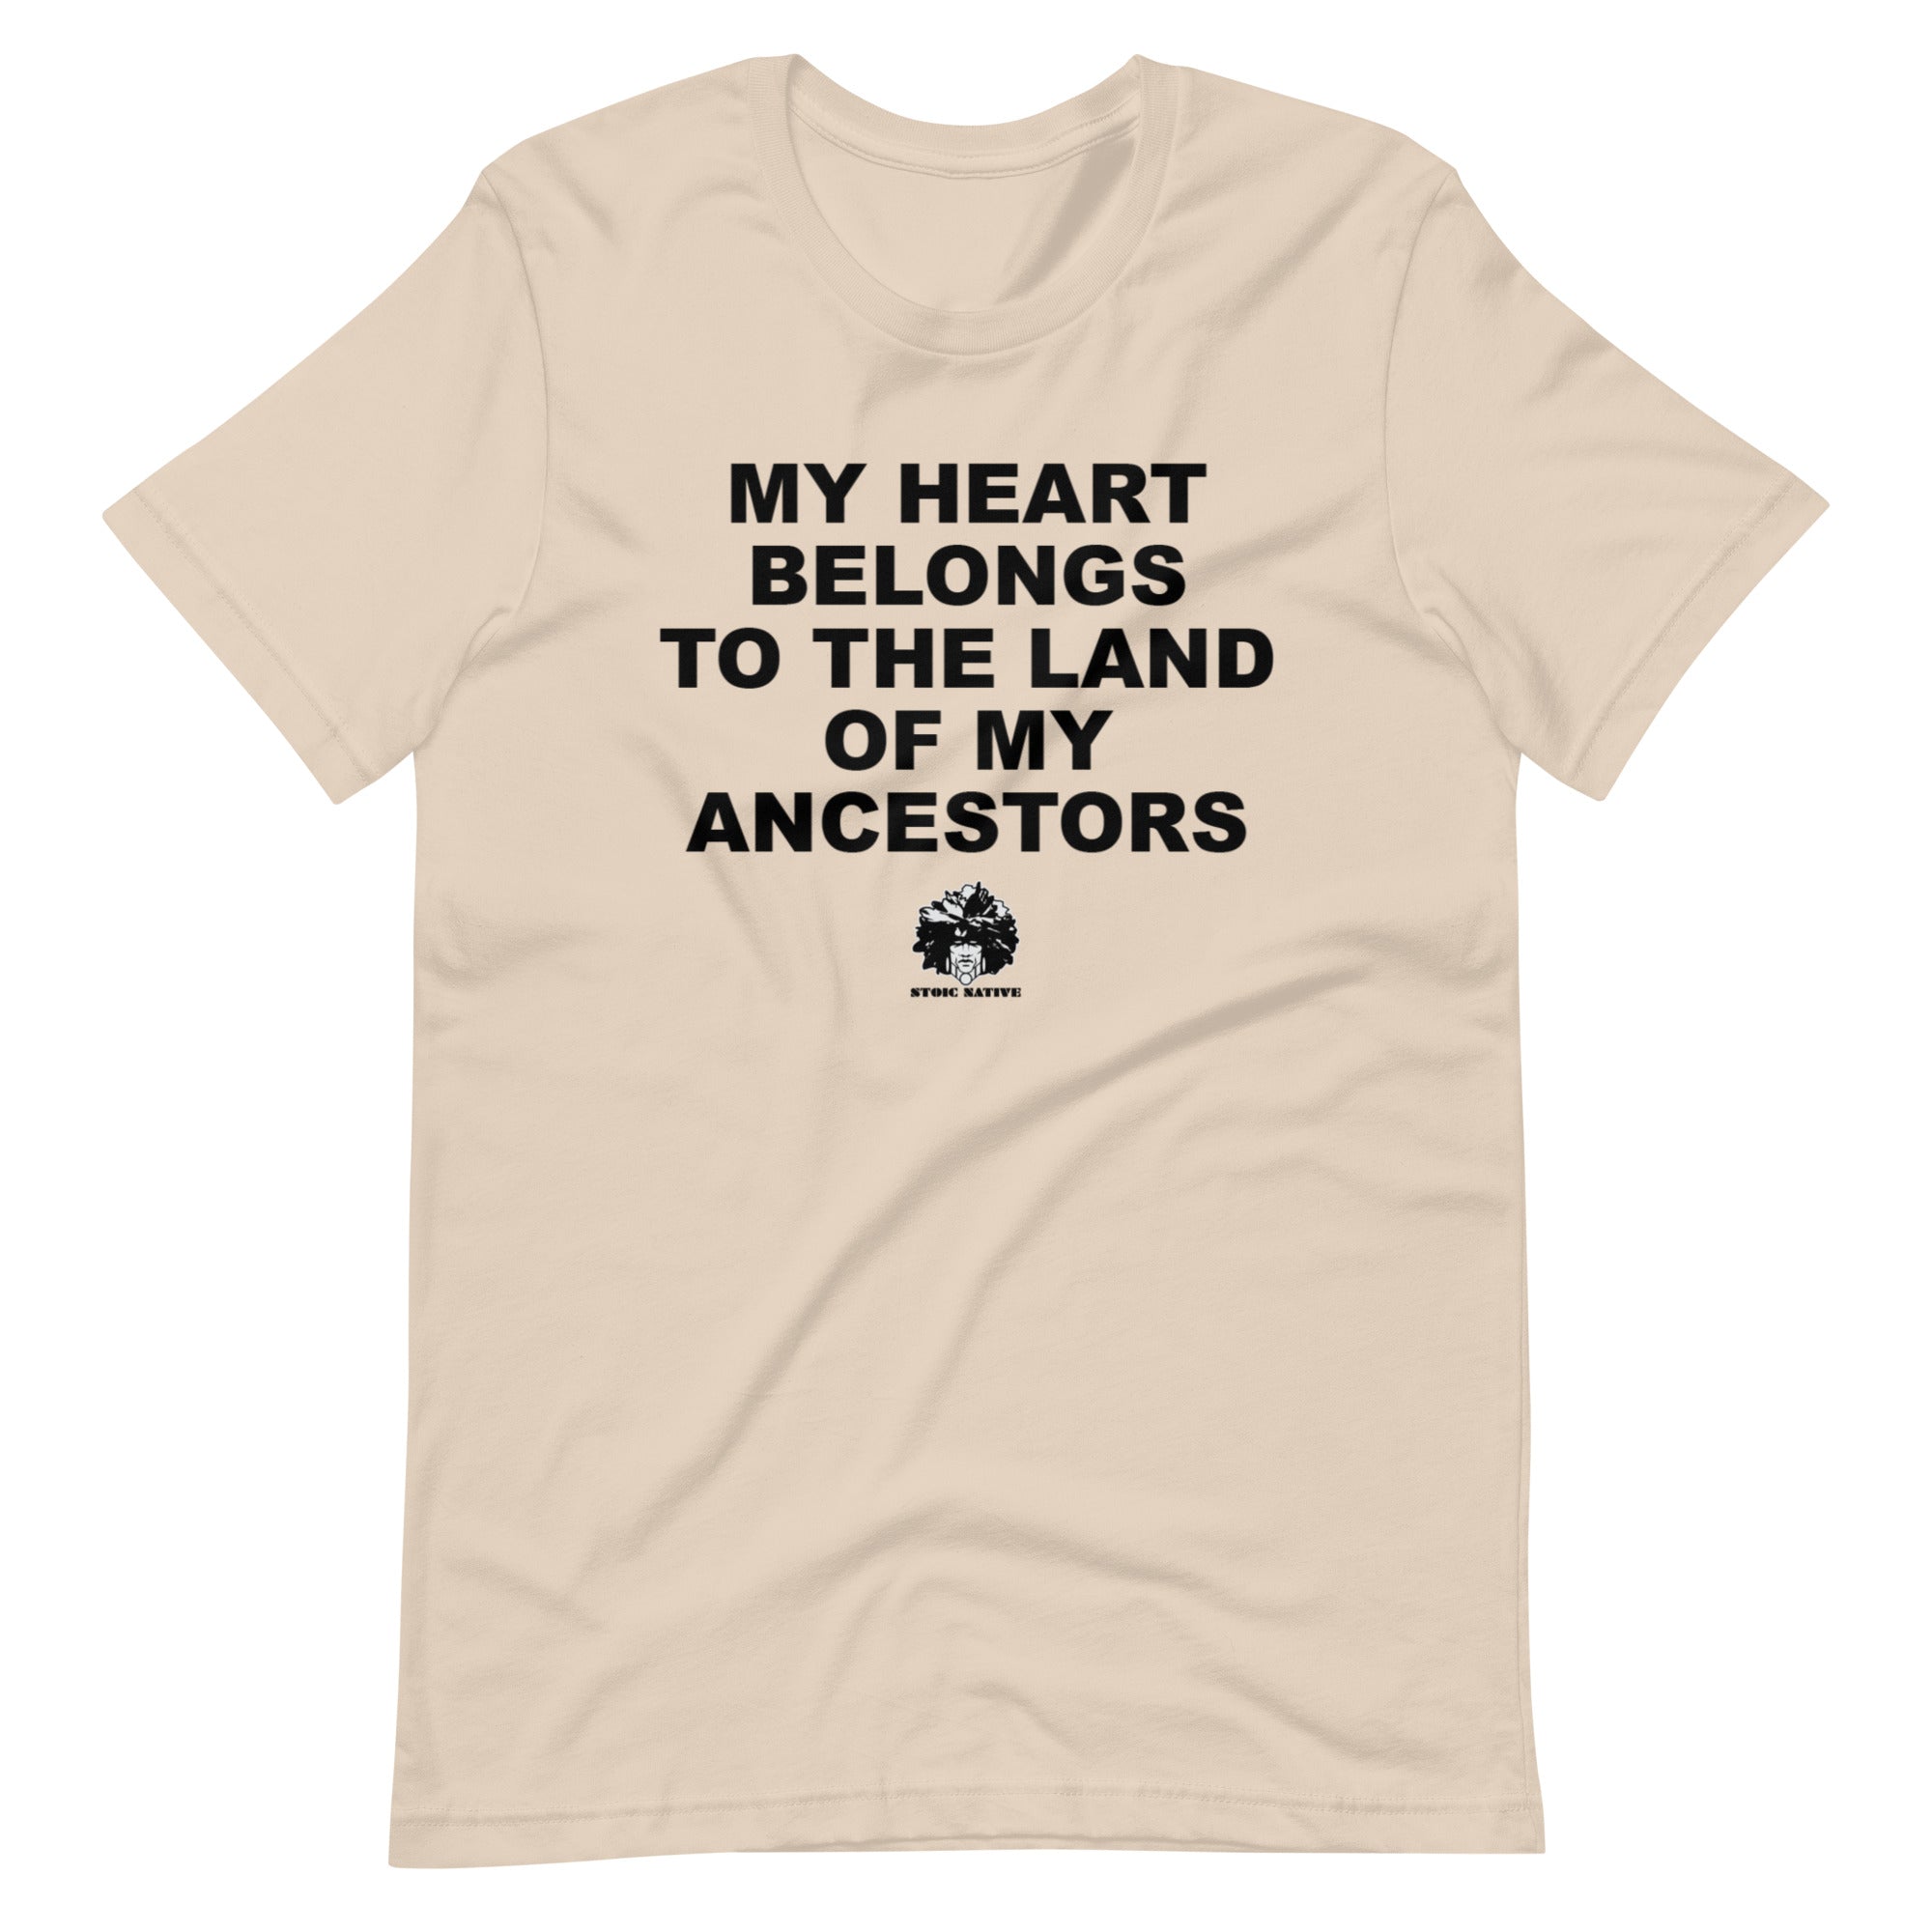 My Heart Belongs to the Land of my Ancestors t-shirt